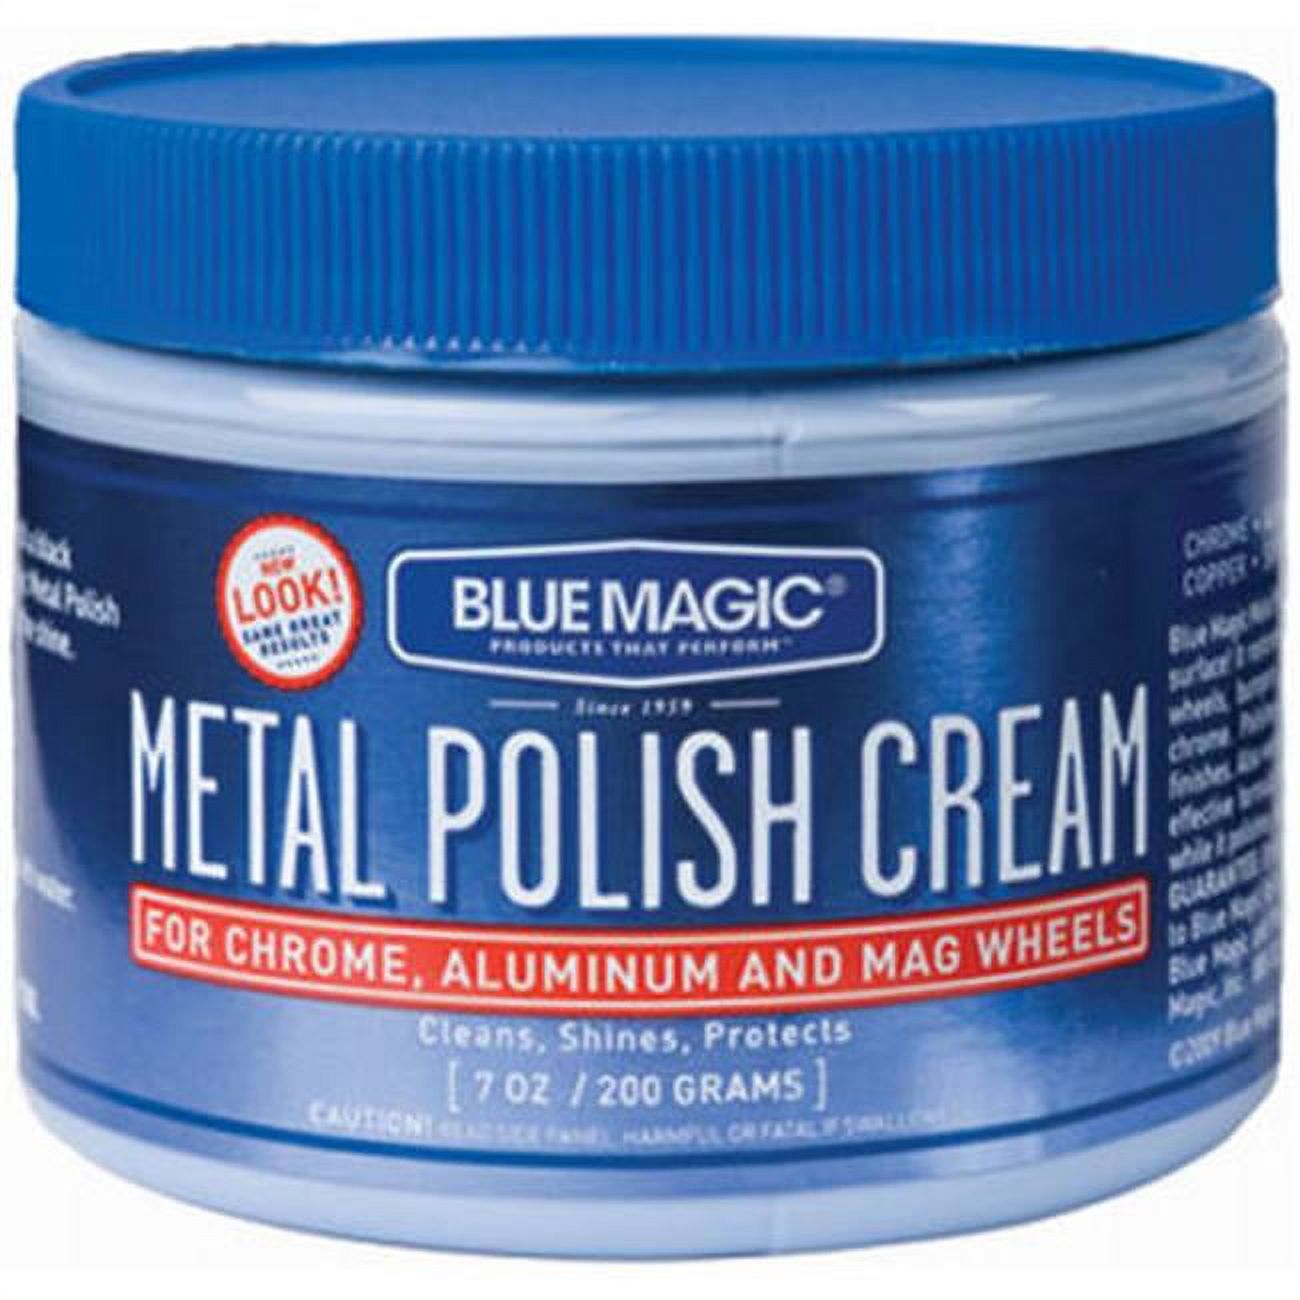 Blue Magic 400 7 oz. Metal Polish Cream 